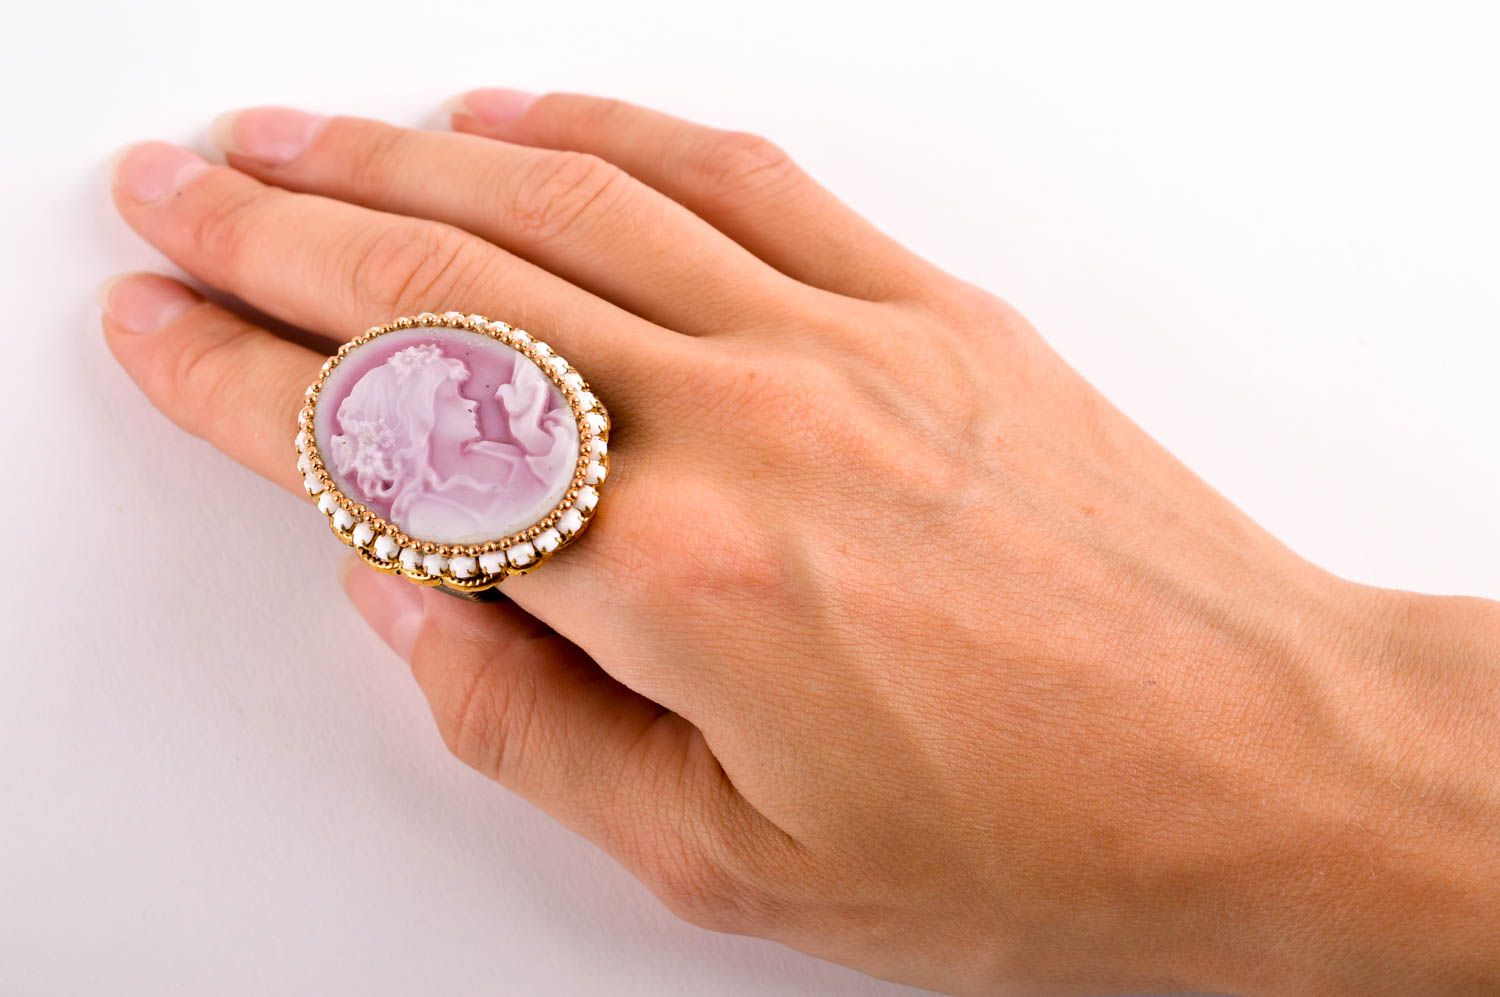 Handmade ring designer ring unusual ring with stone beautiful jewelry gift ideas photo 5